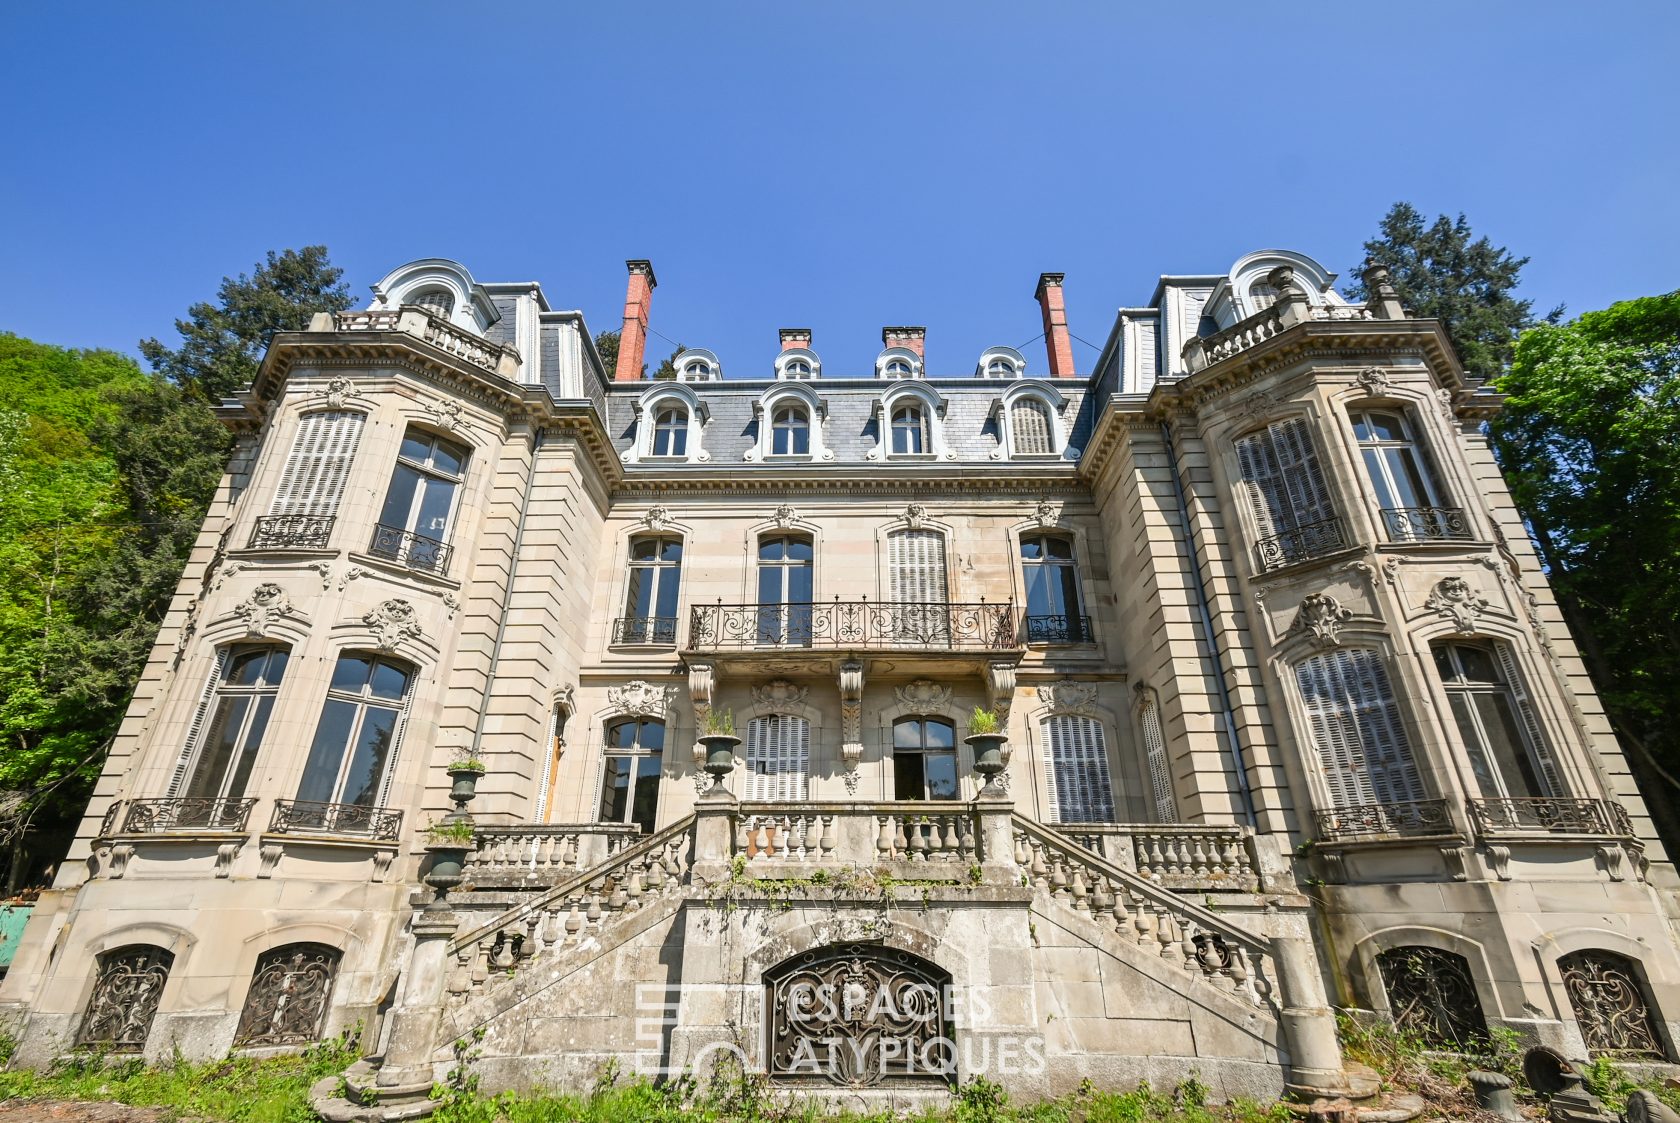 Le Château de Mimi